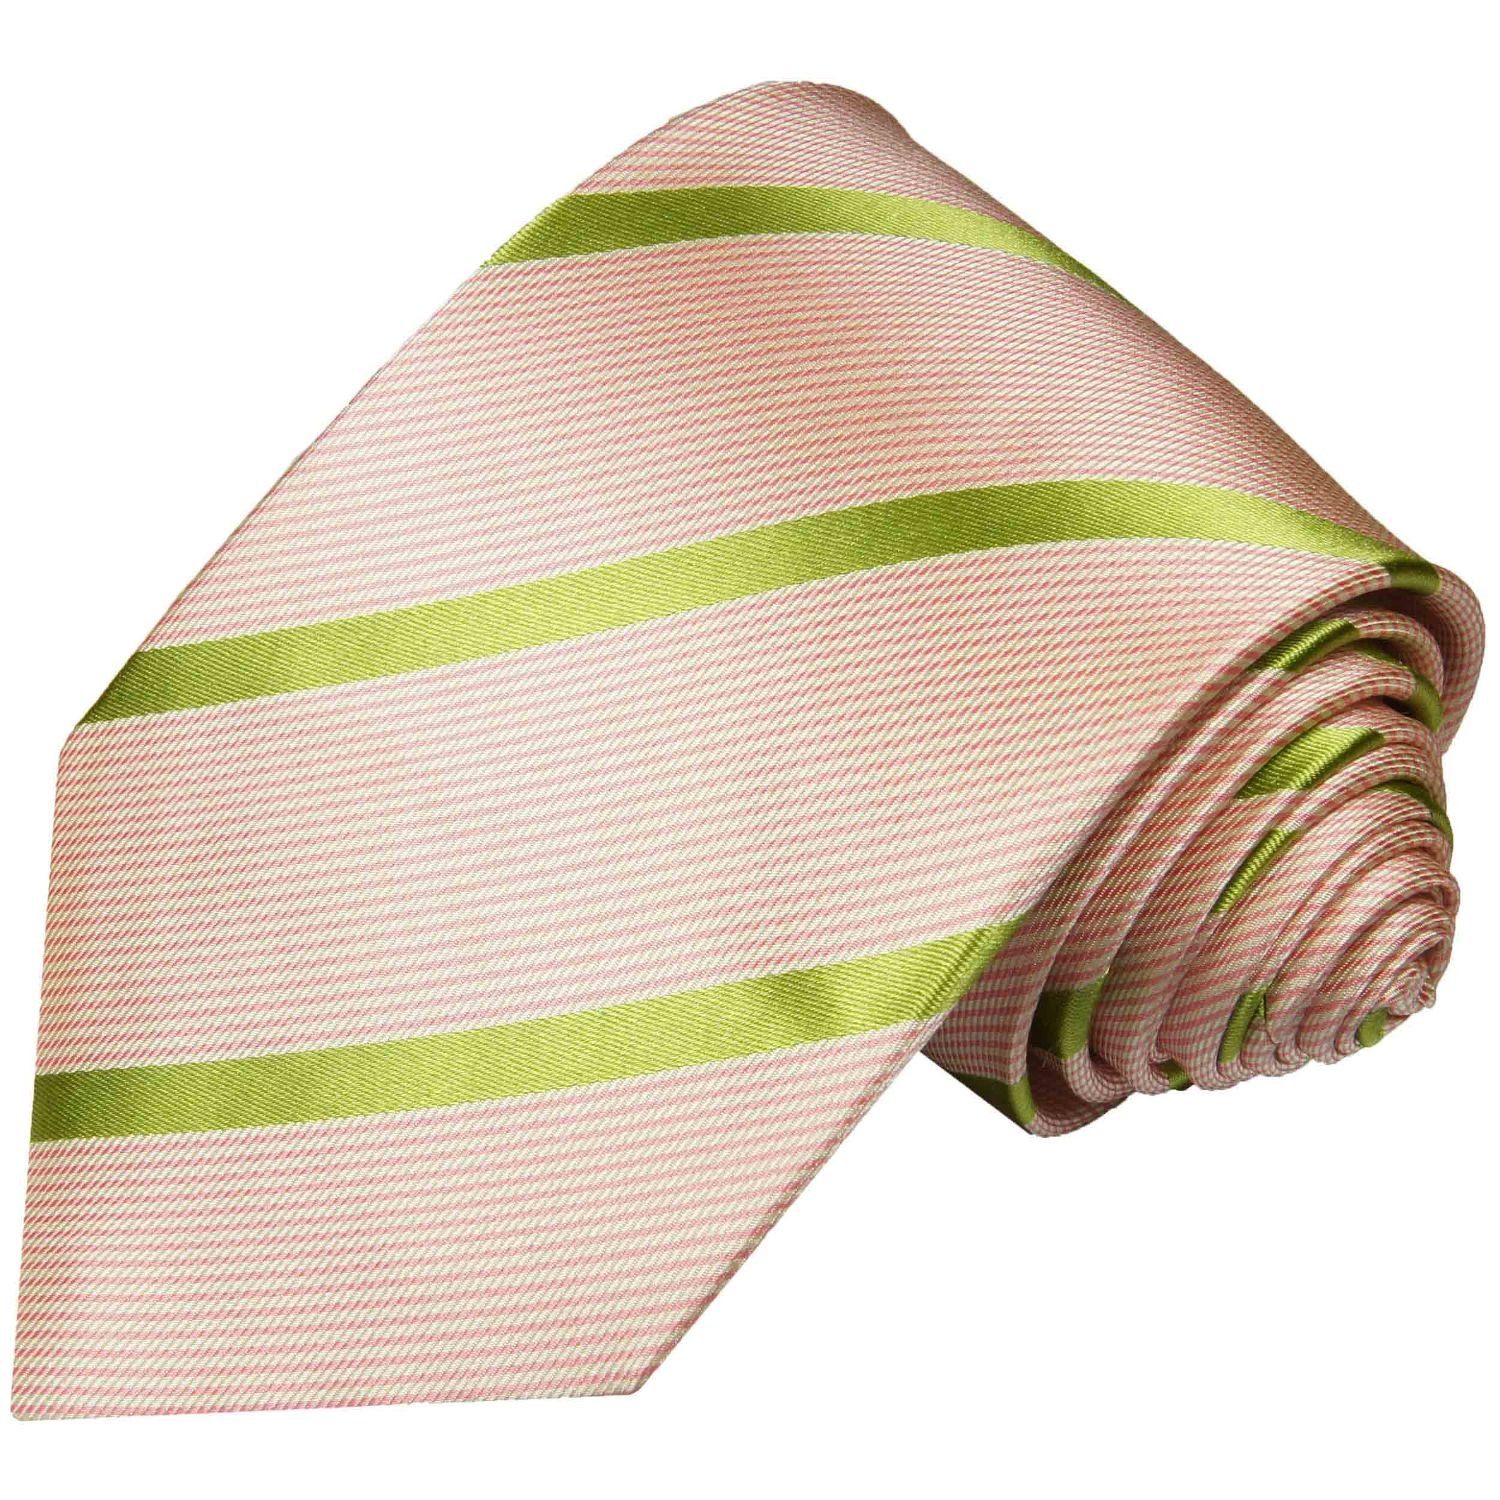 Paul Malone Krawatte Designer Seidenkrawatte Herren Schlips modern gestreift 100% Seide Schmal (6cm), rosa grün 635